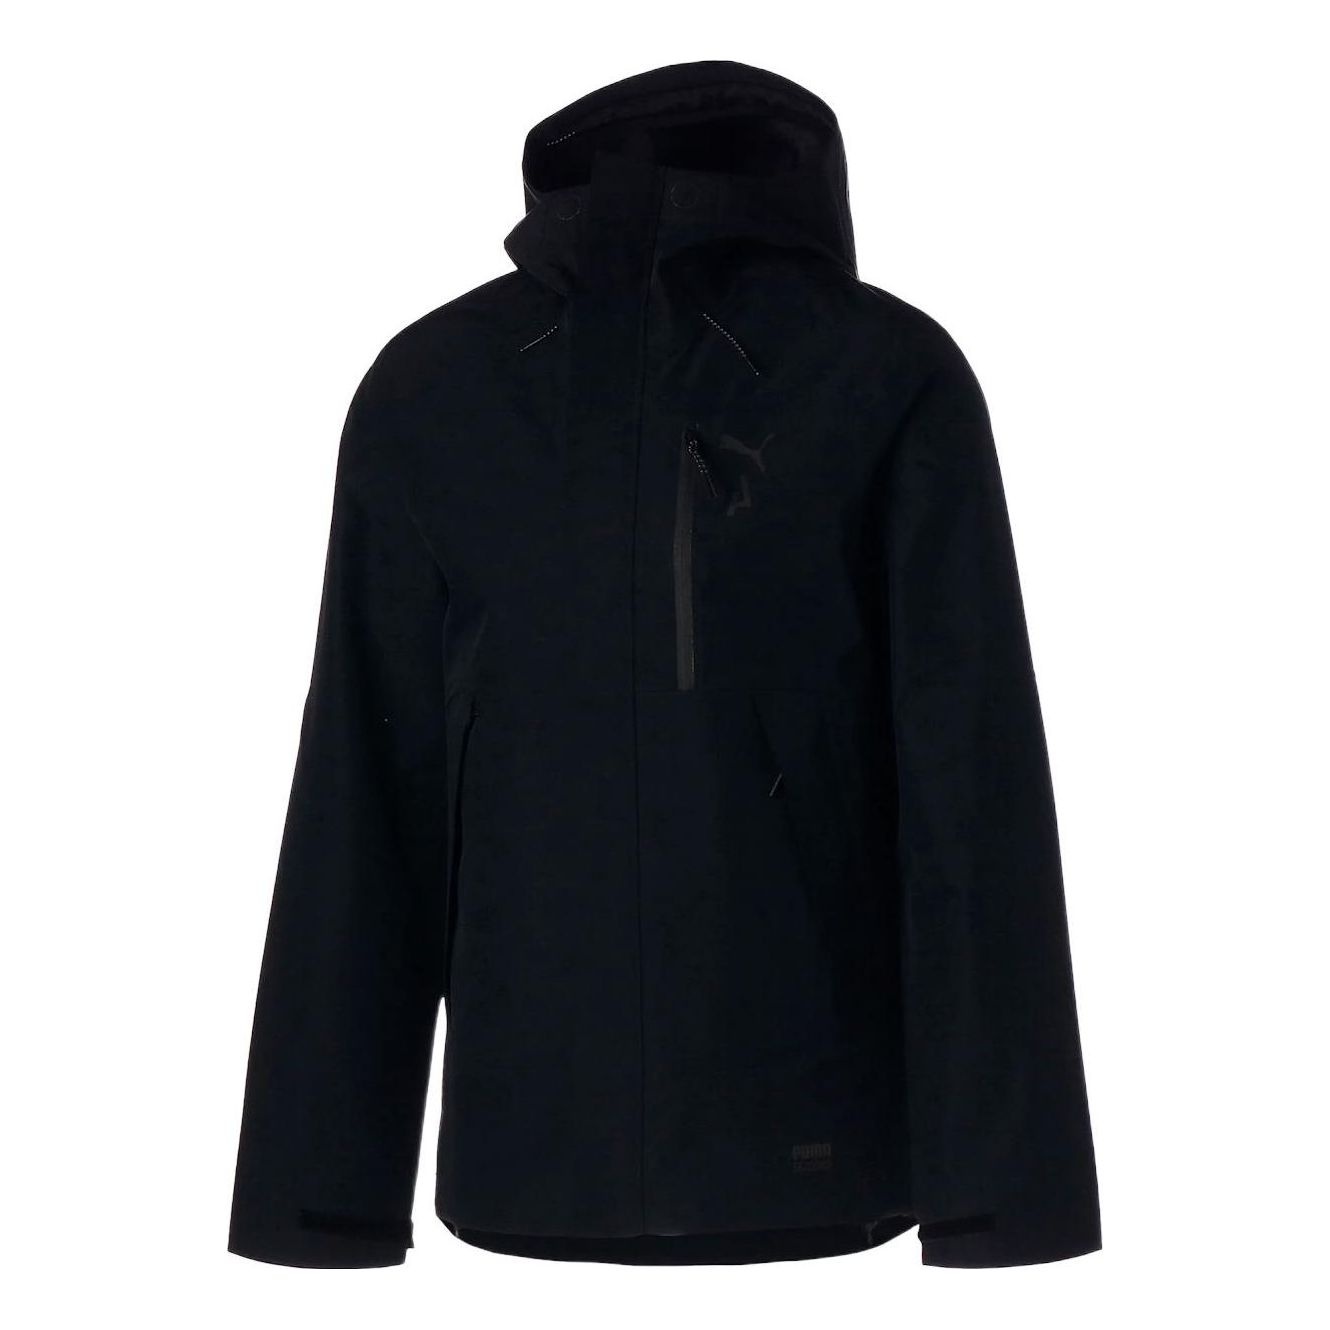 Puma Seasons Stormcell Full Zip Jacket 'Black' 522570-01 - 1